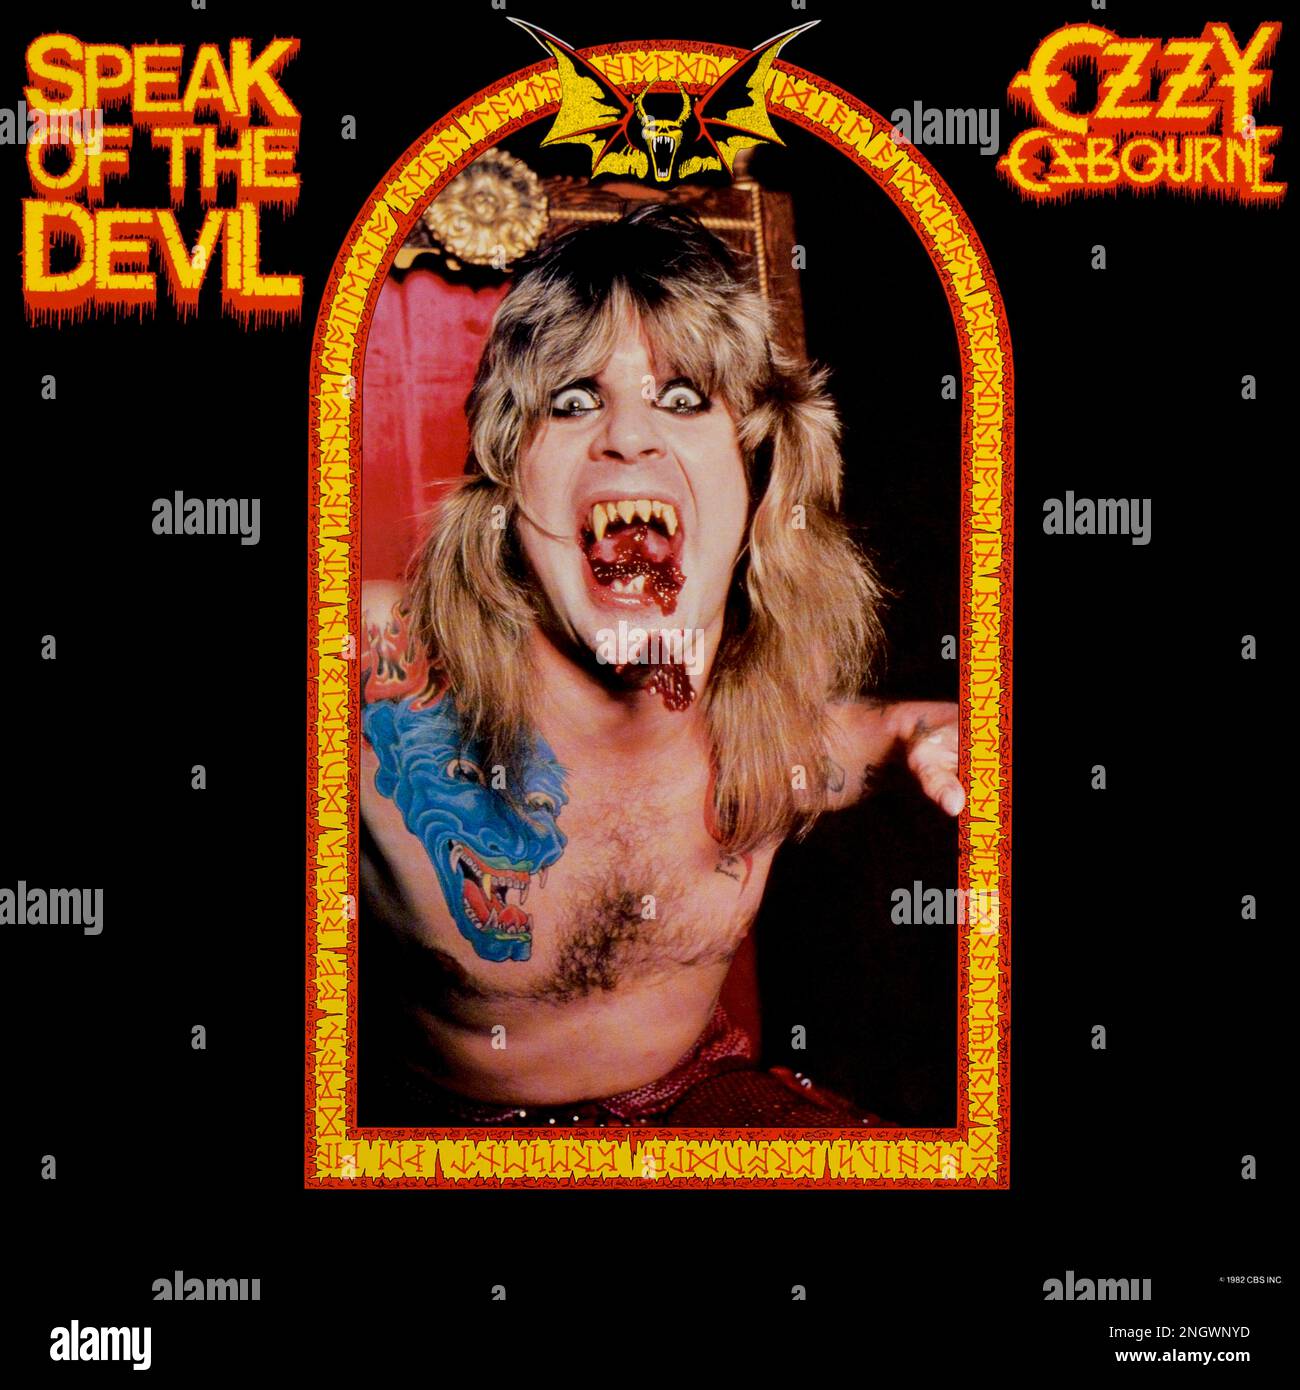 Ozzy Osbourne - original vinyl album cover - Speak Of The Devil - 1982 Stock Photo